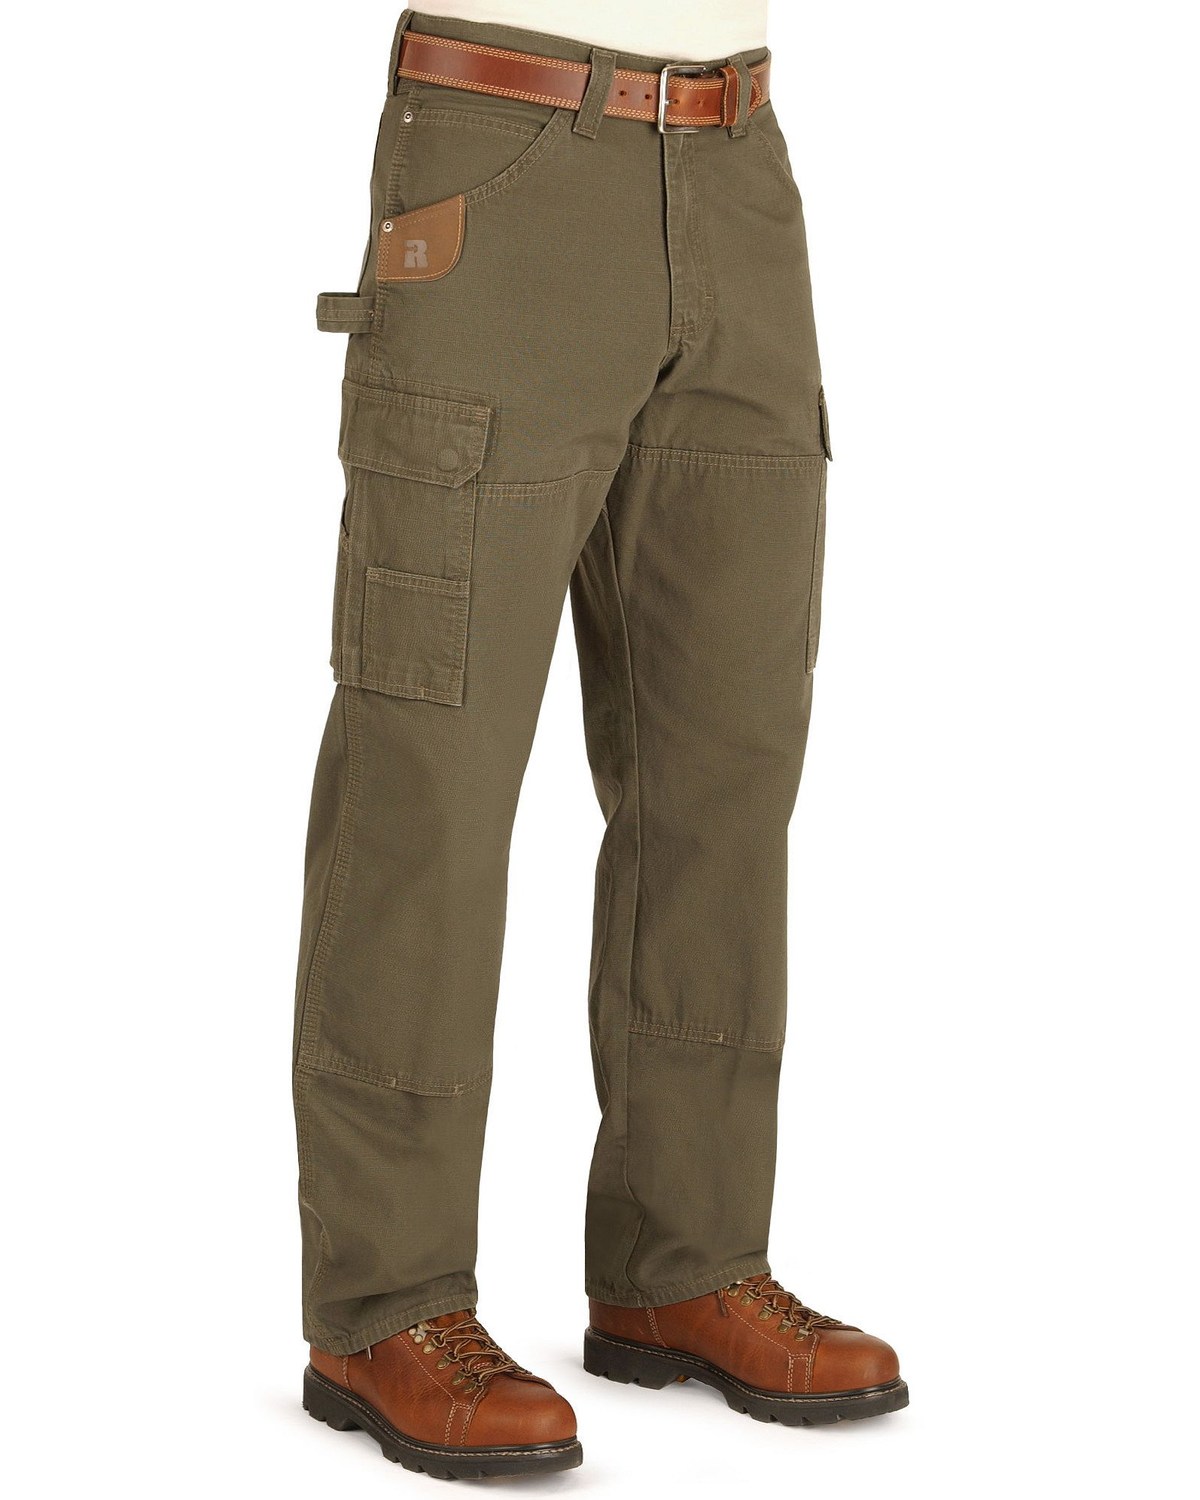 Wrangler Riggs Workwear Ranger Pants | Boot Barn